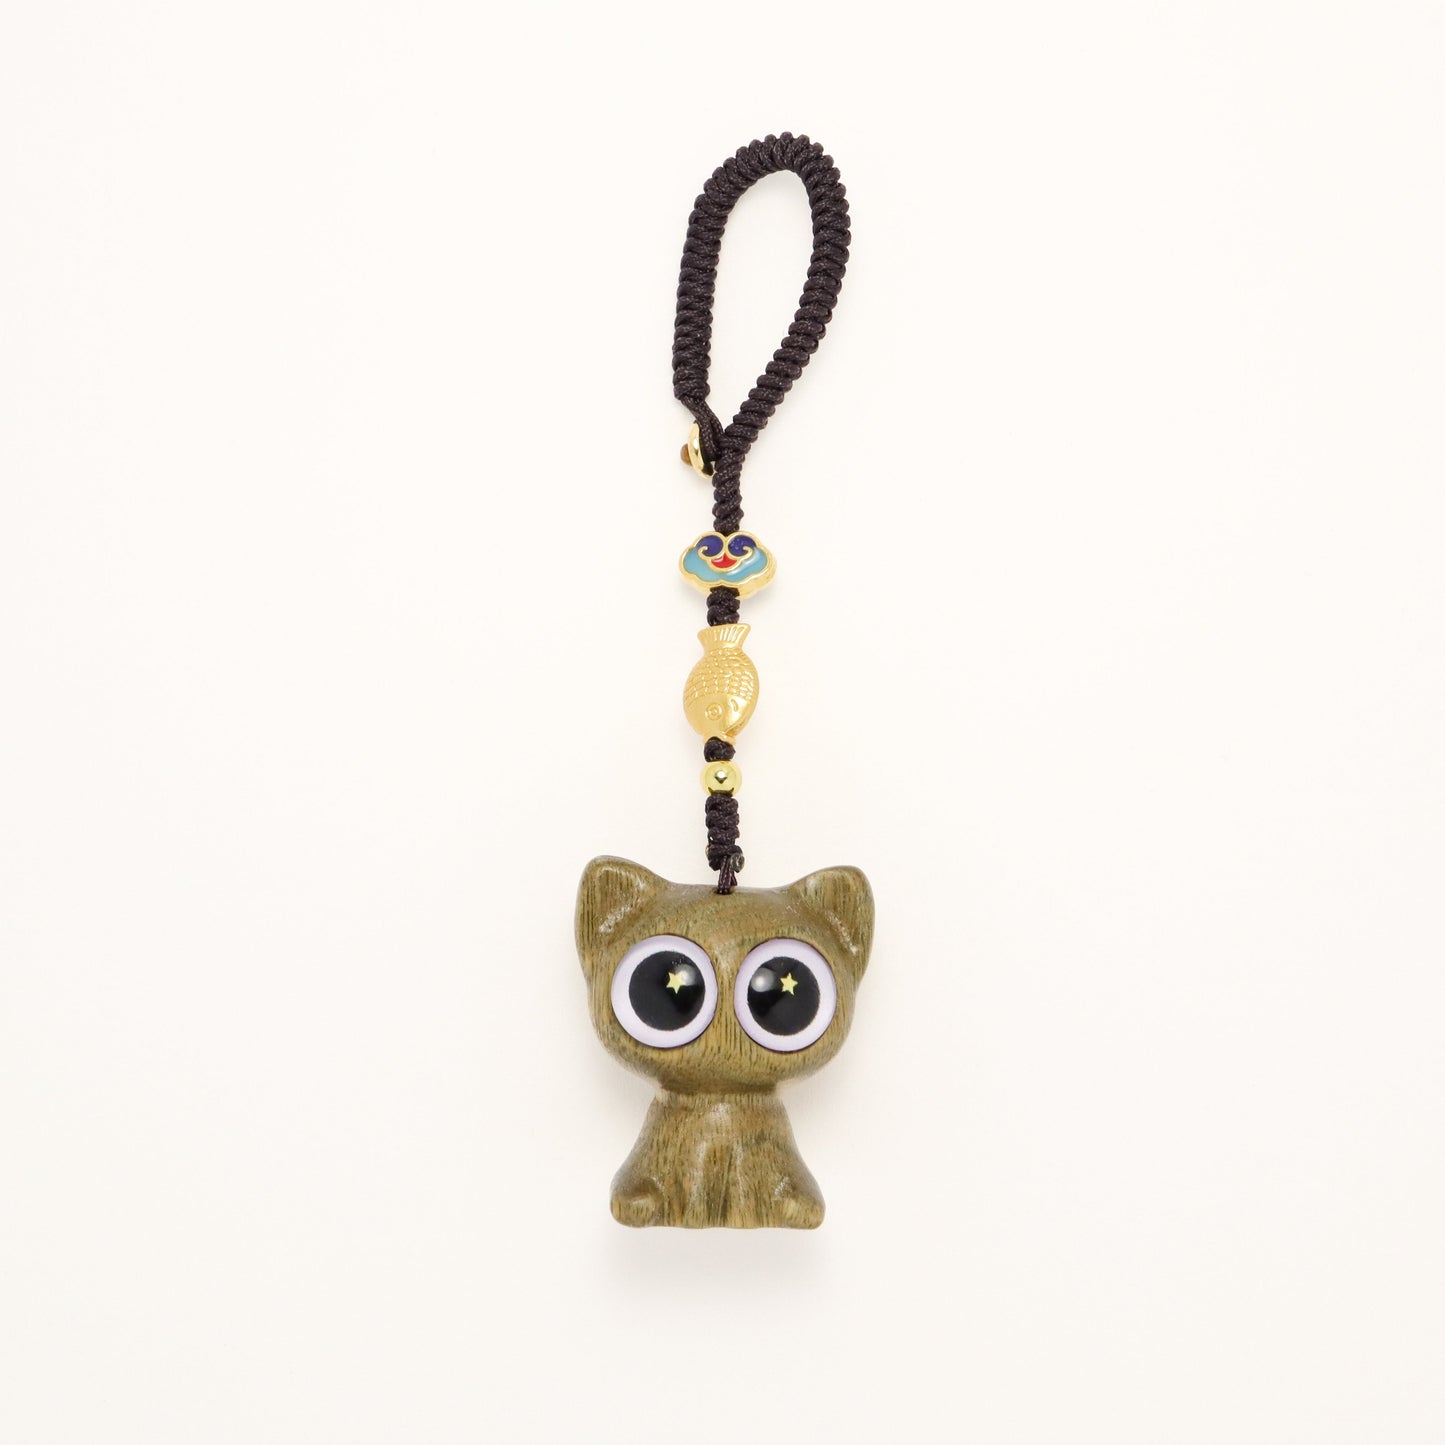 Star Eye Kitten - Green Sandalwood Cat Key Chain Phone Charm